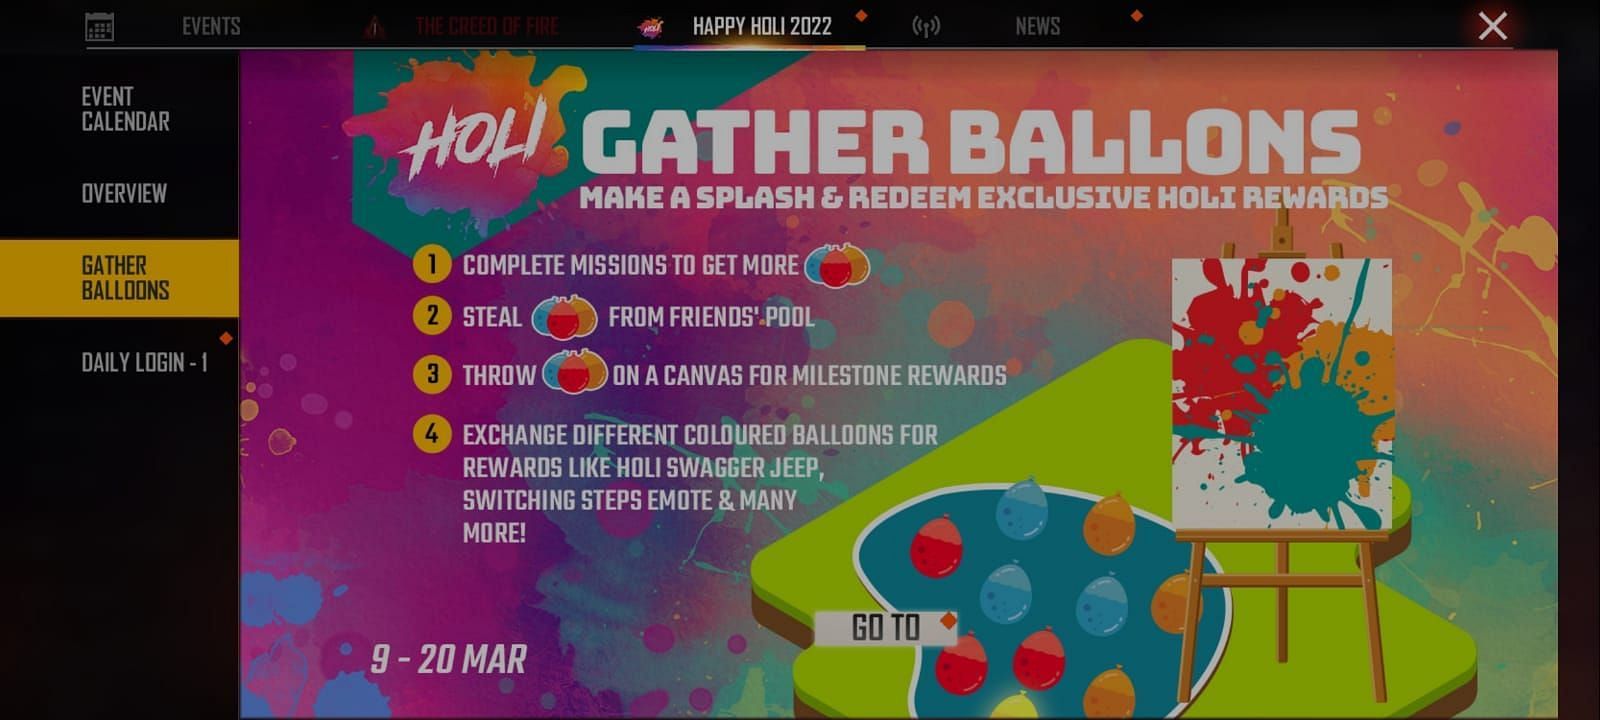 Gather Balloons, Make a Splash event in Free Fire MAX (Image via Garena)